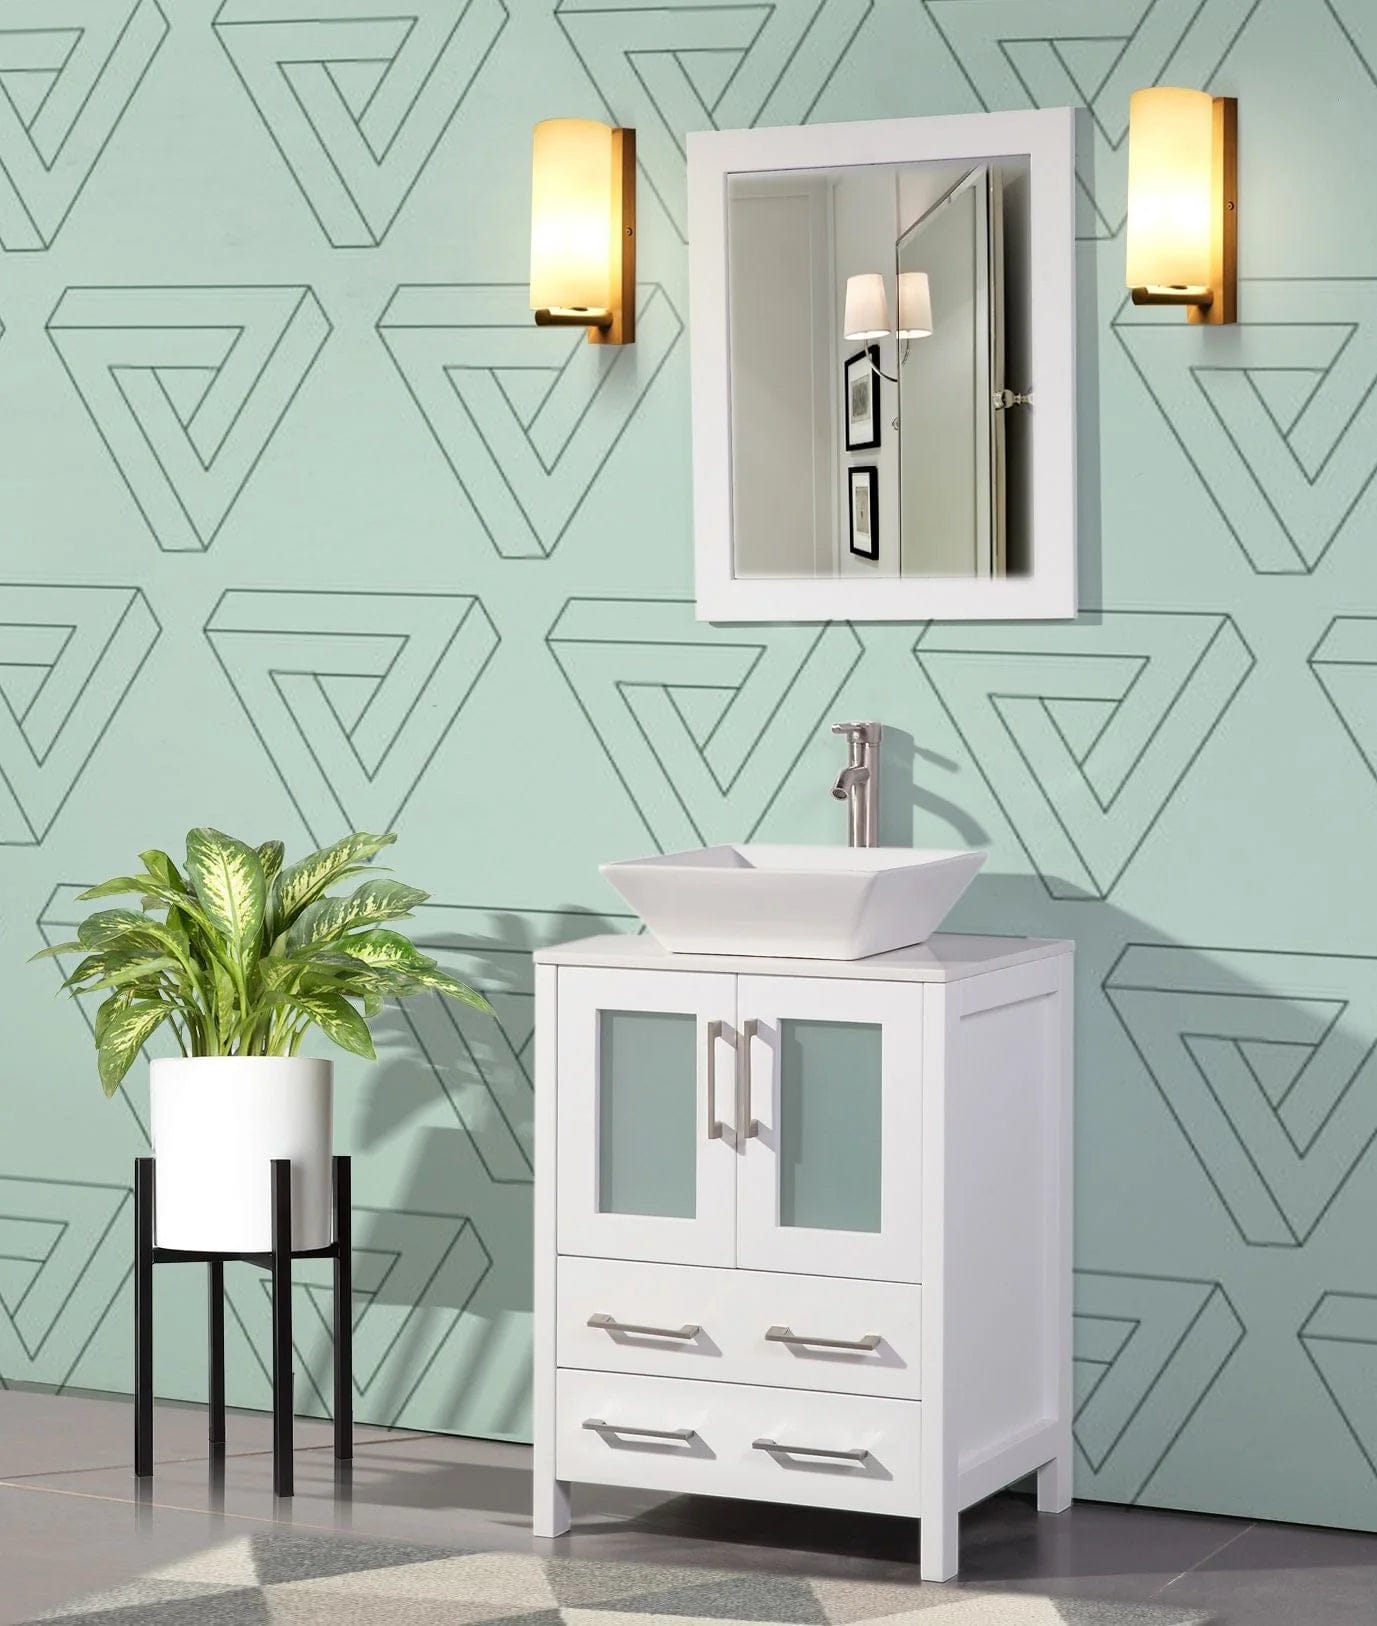 24 in. Single Sink Bathroom Vanity Combo Set in White - Decohub Home